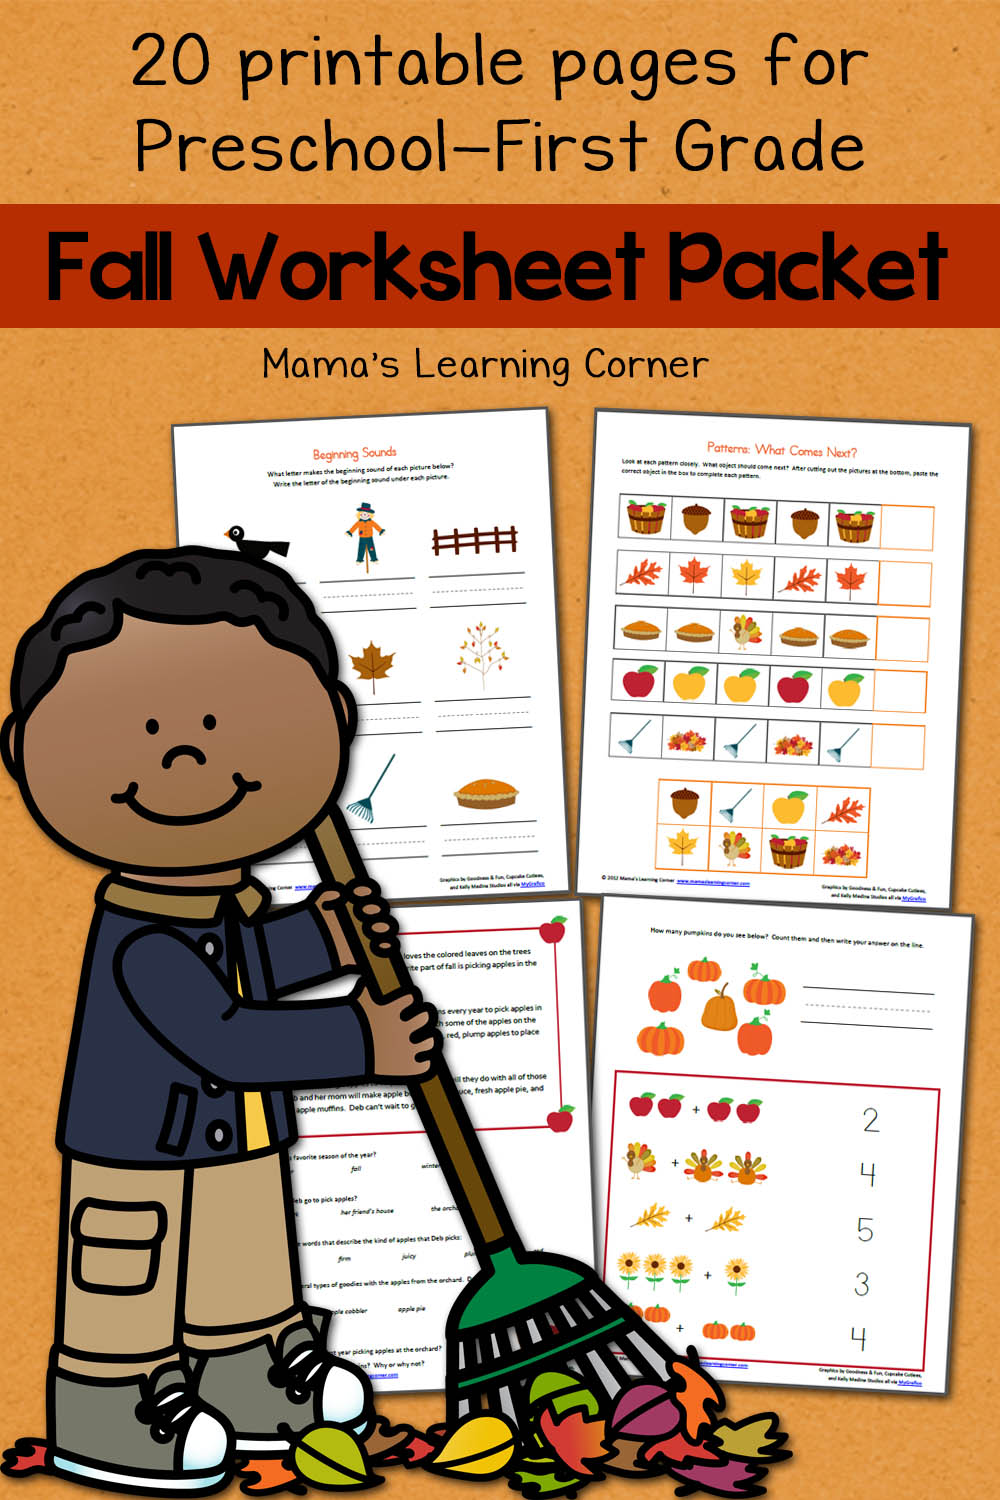 Fall Worksheet Packet for PreschoolFirst Grade Mamas Learning Corner